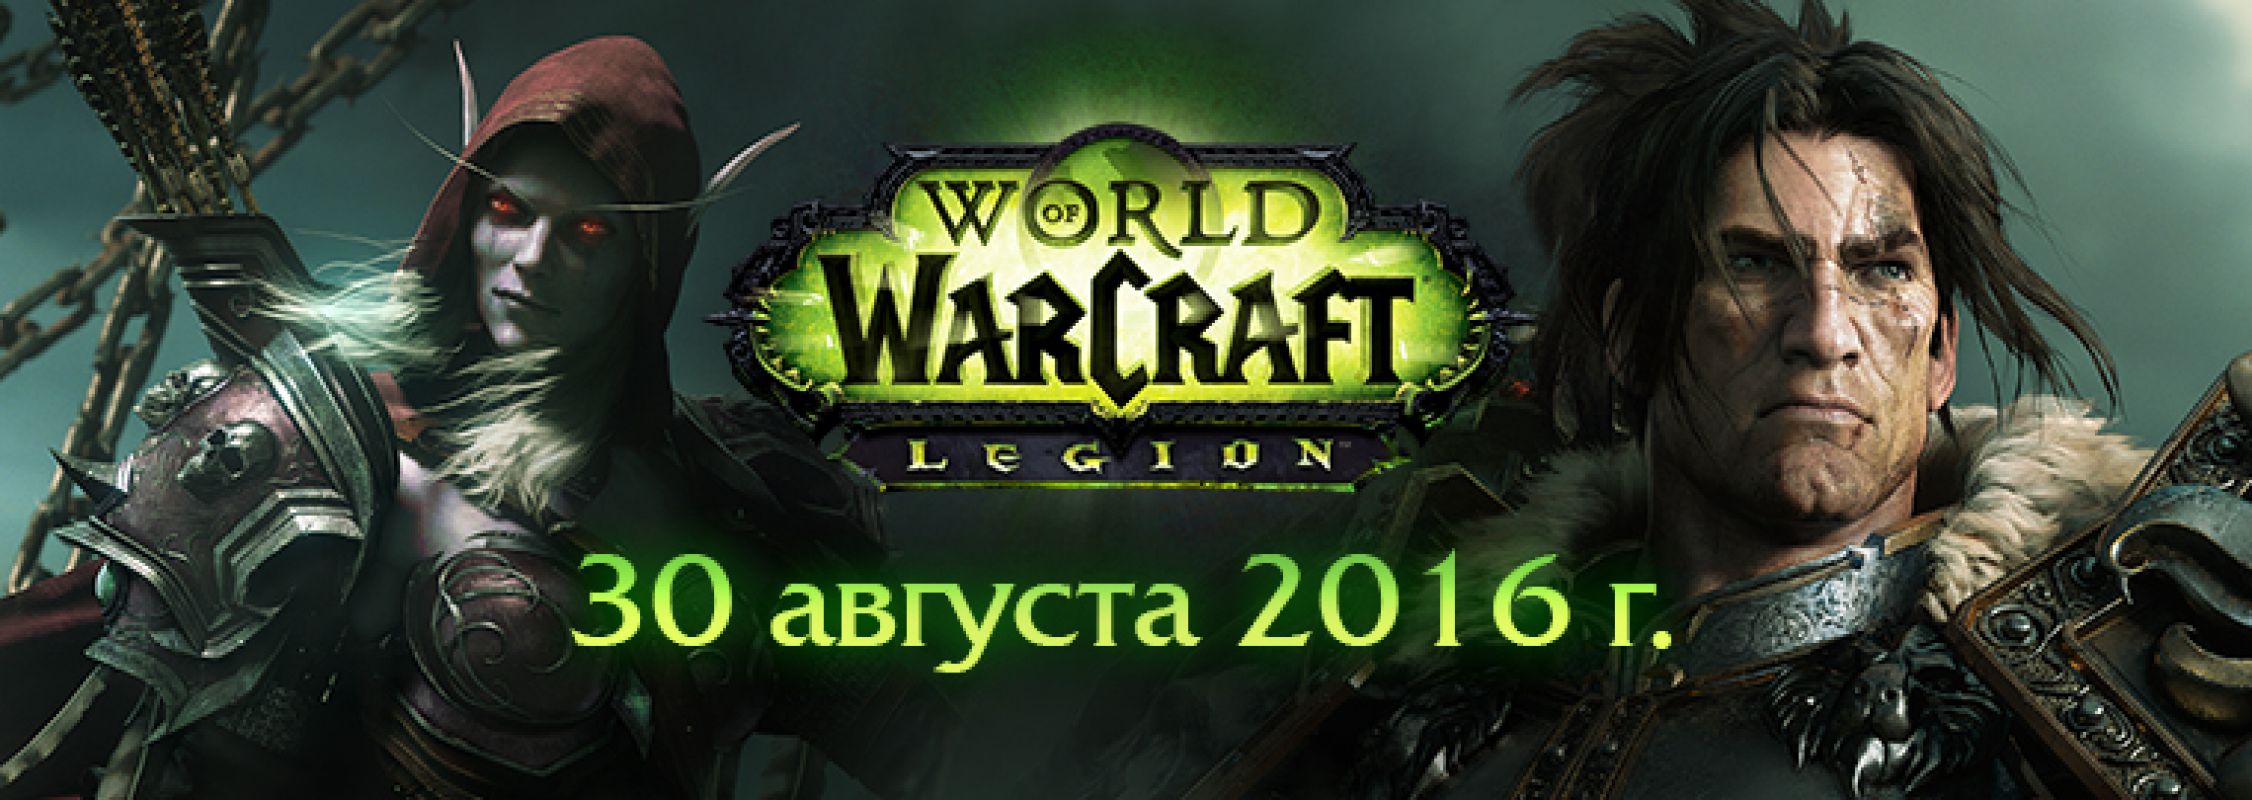 Объявлена дата выхода World of Warcraft Legion